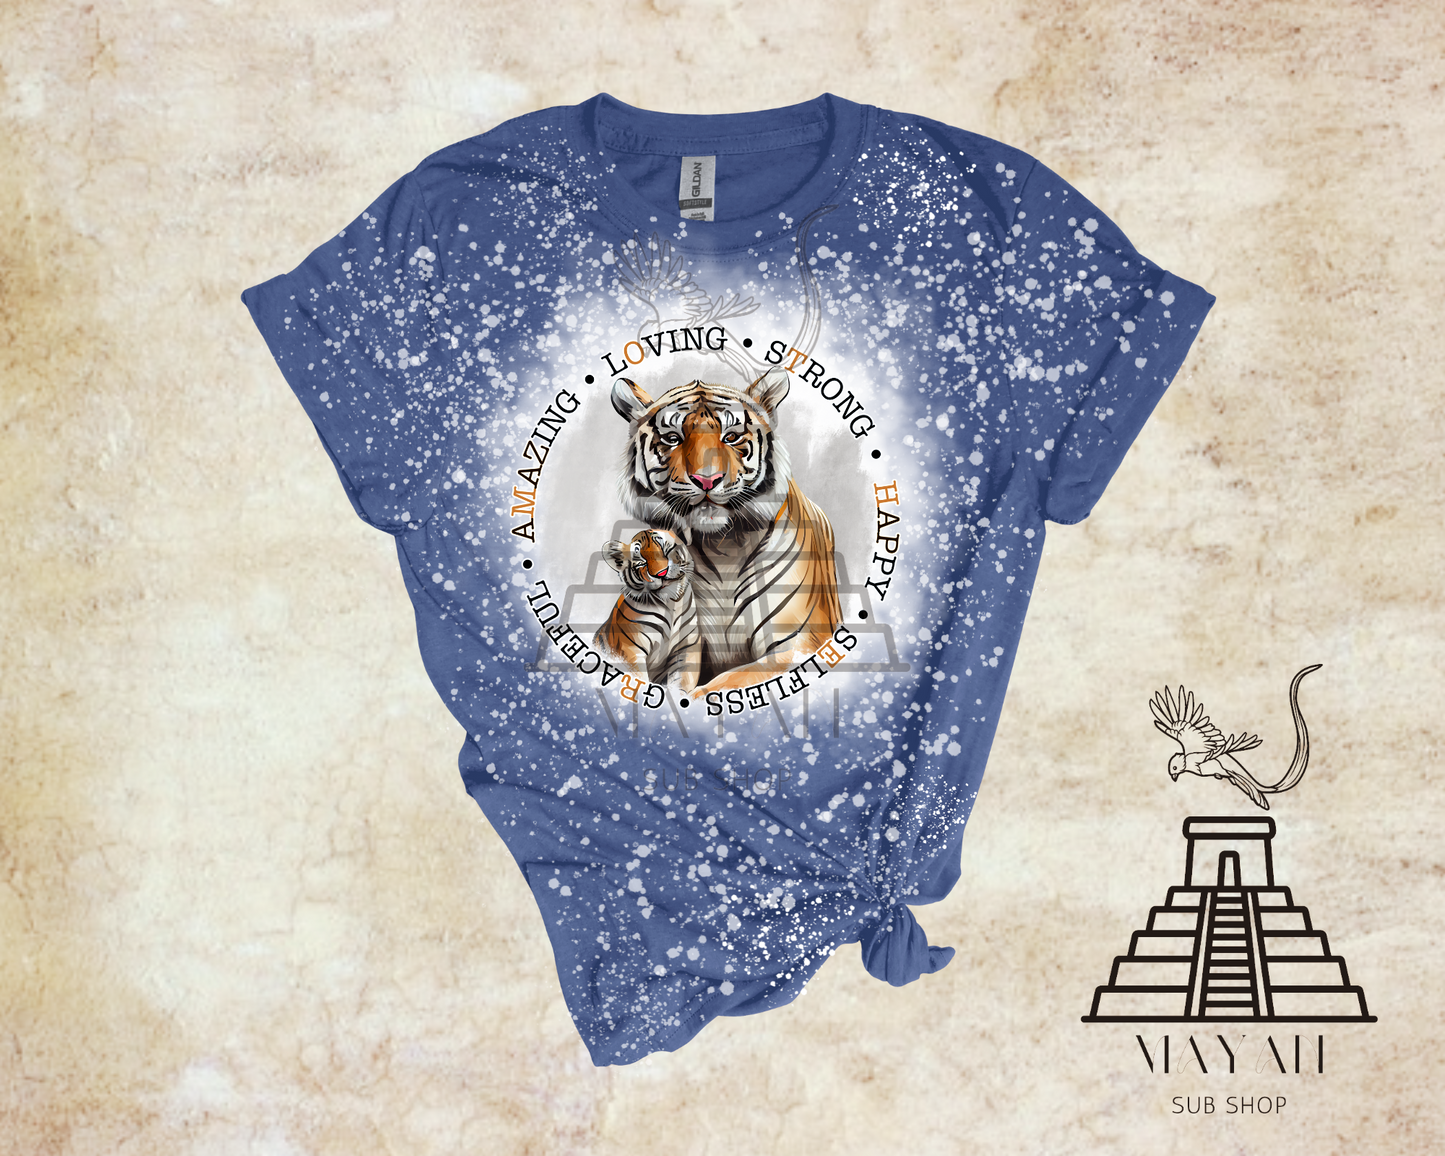 Tiger mother bleached shirt - Mayan Sub Shop